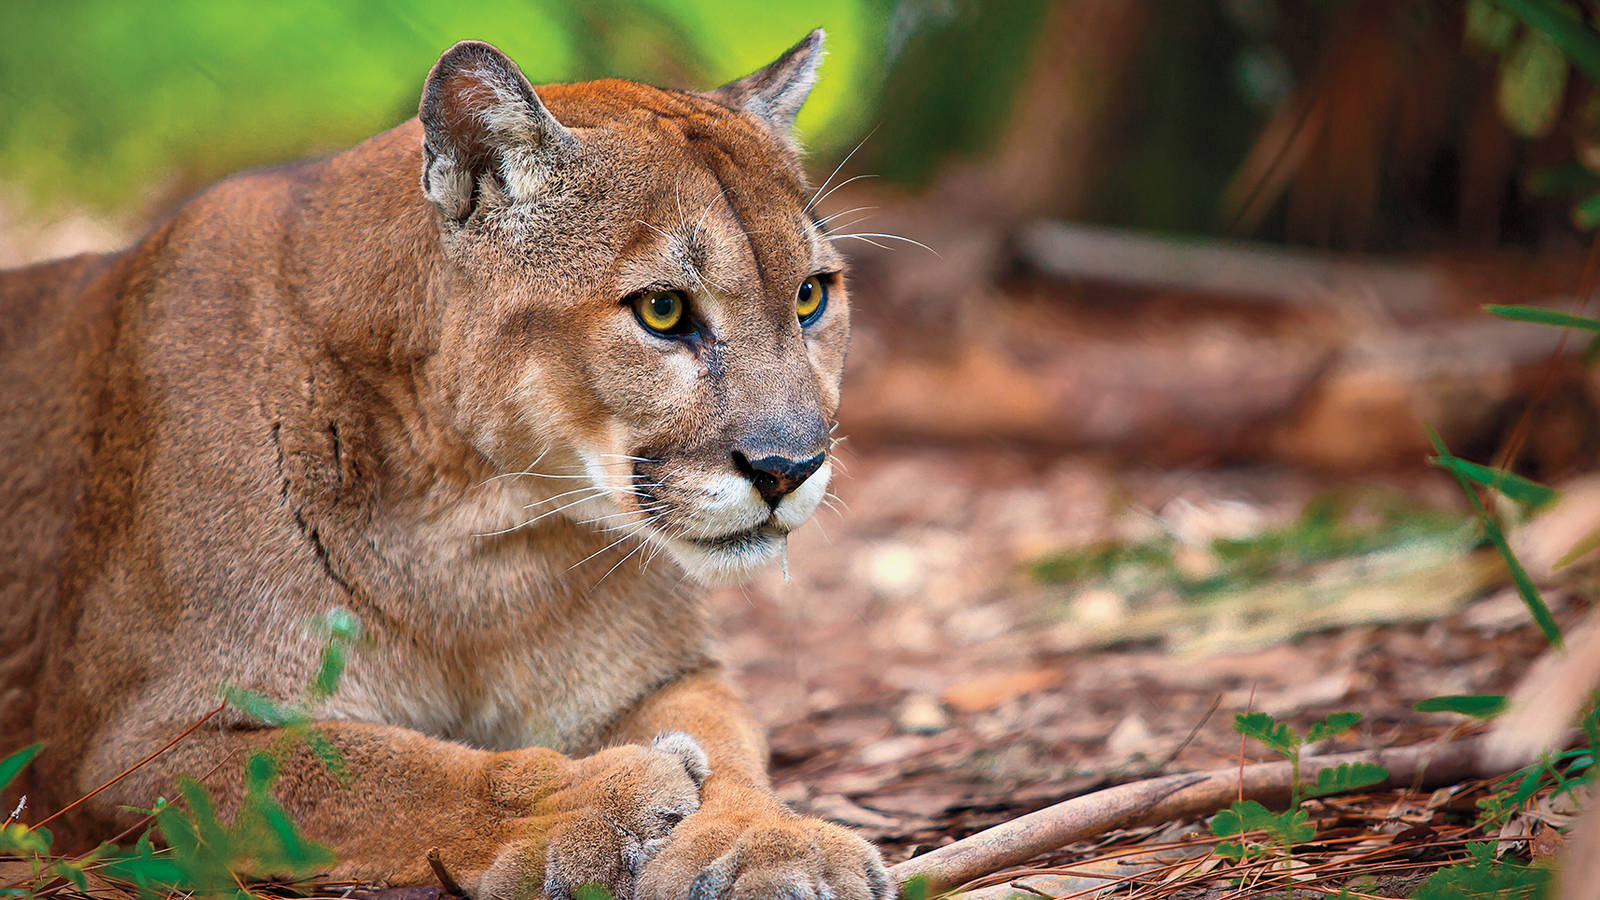 Saving the Panther · National Parks Conservation Association